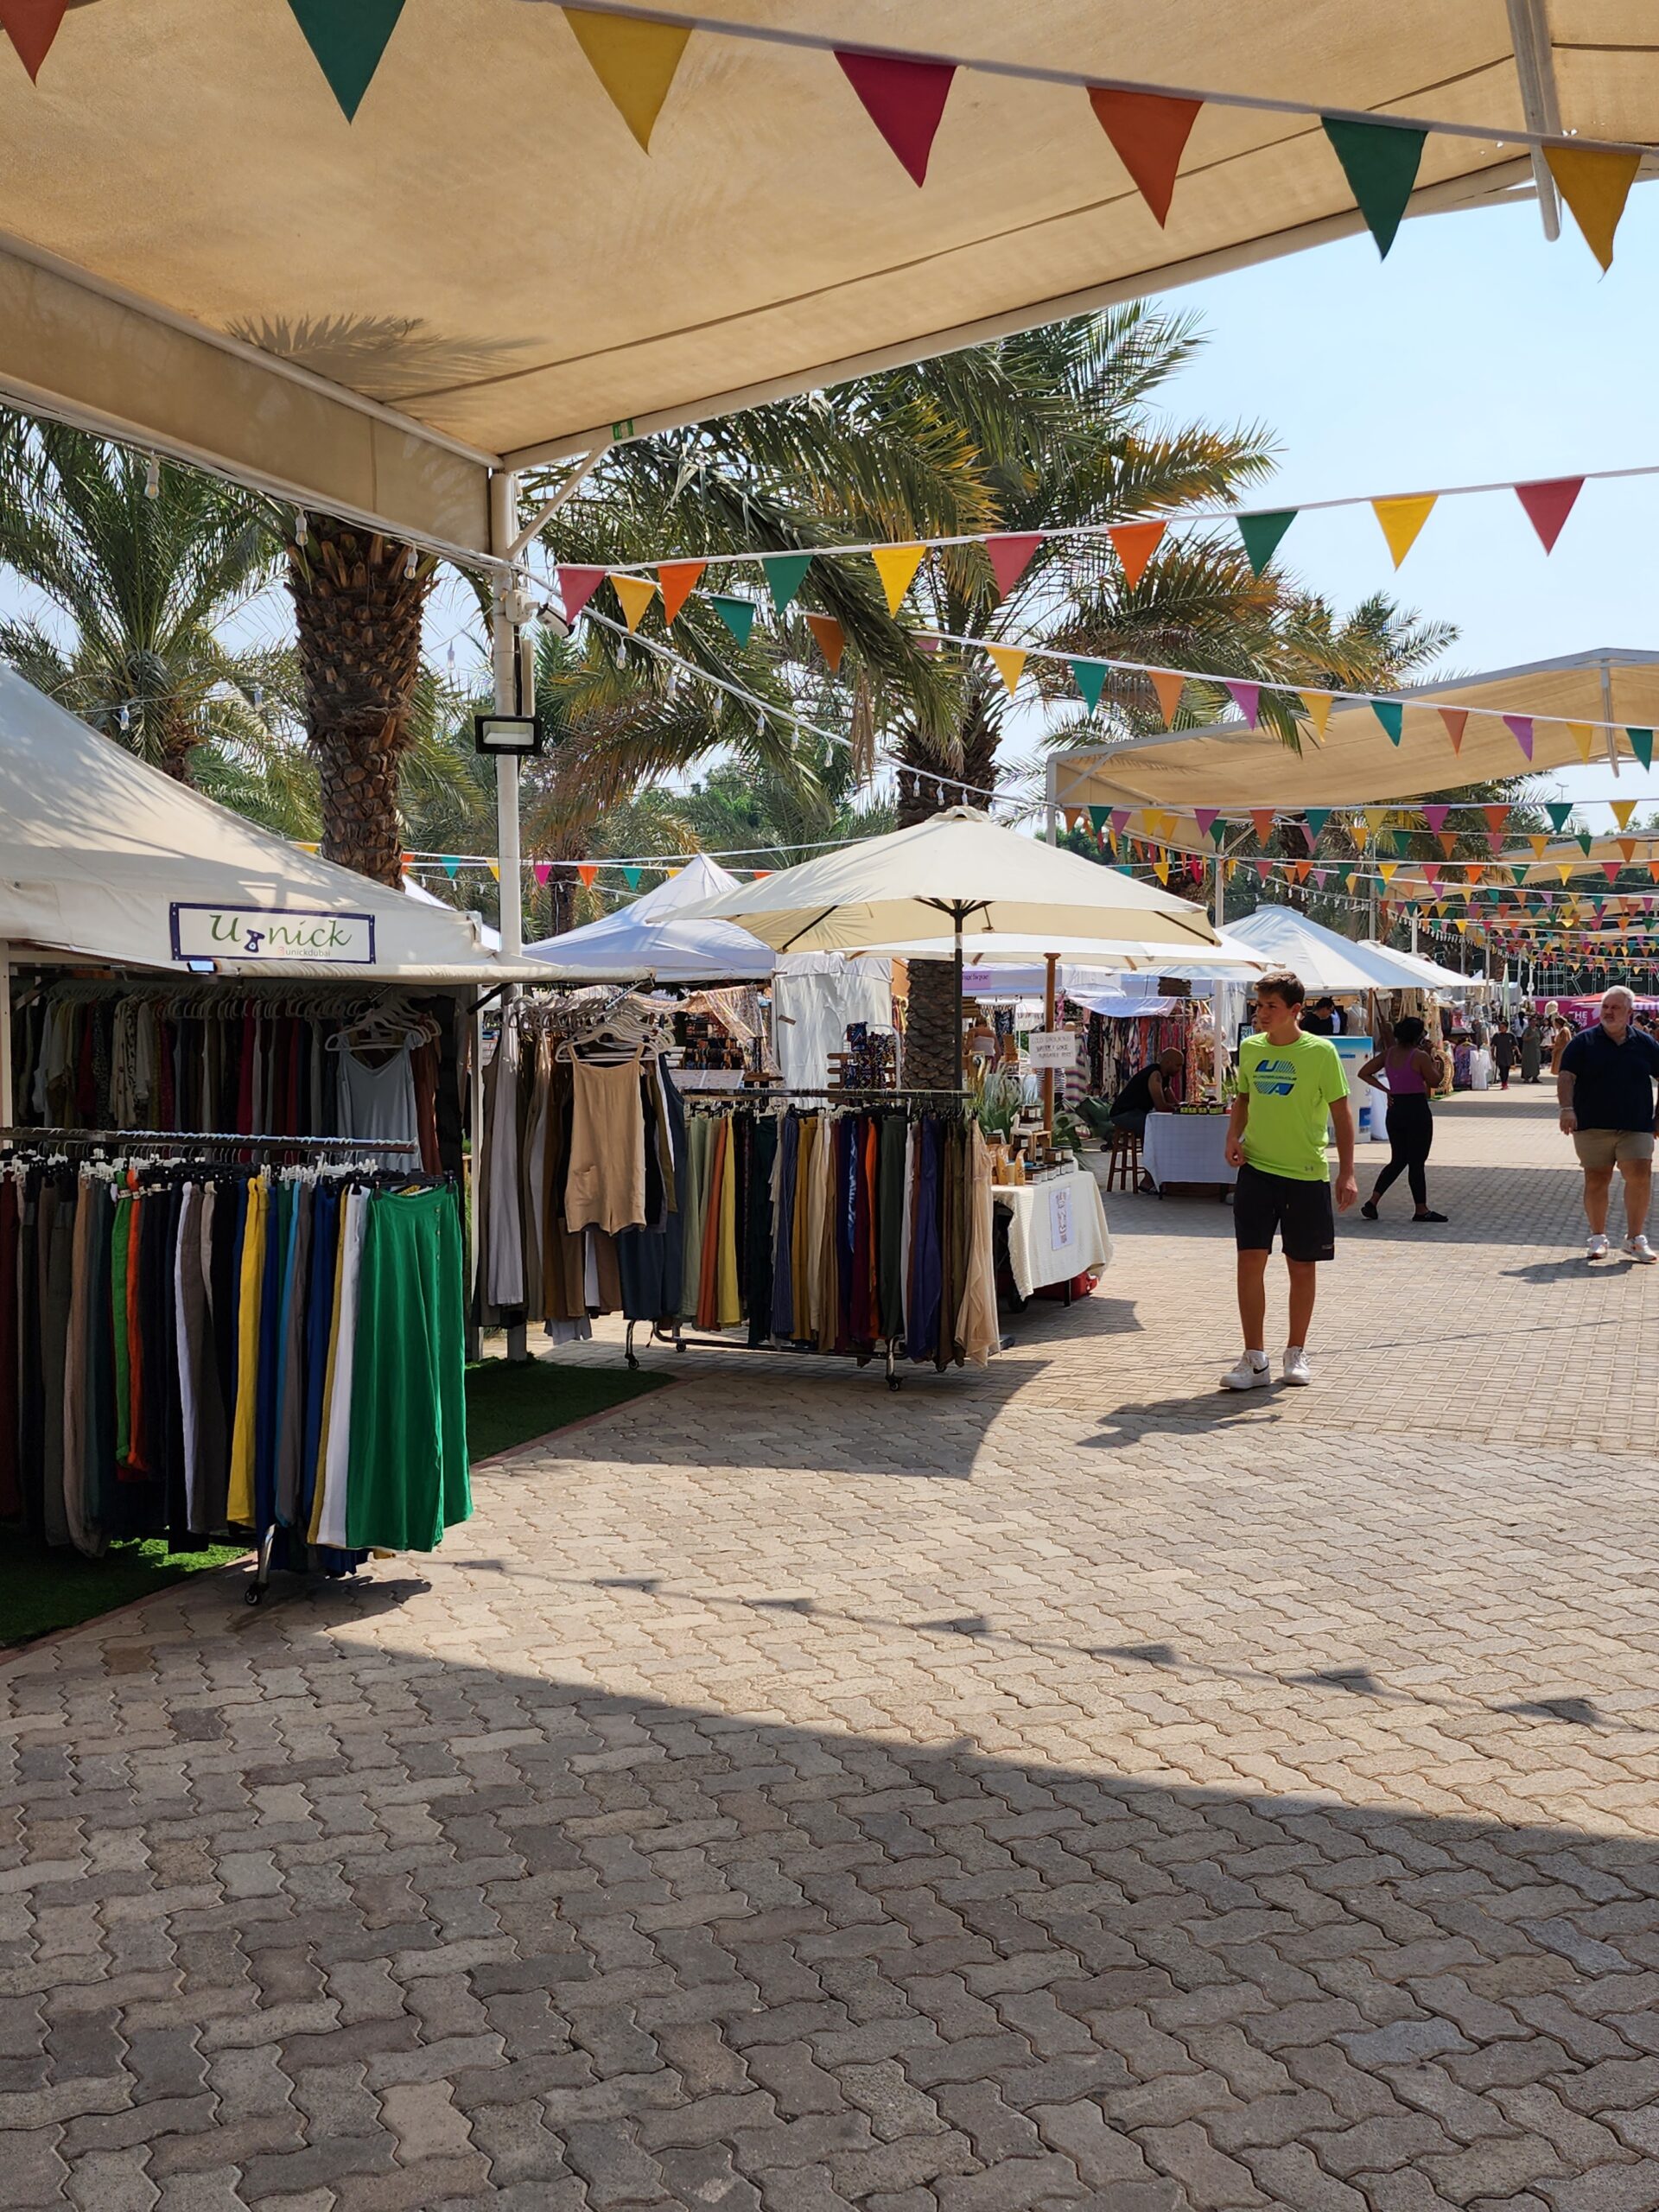 Outdoor Ripe Market Academy Park, Dubai